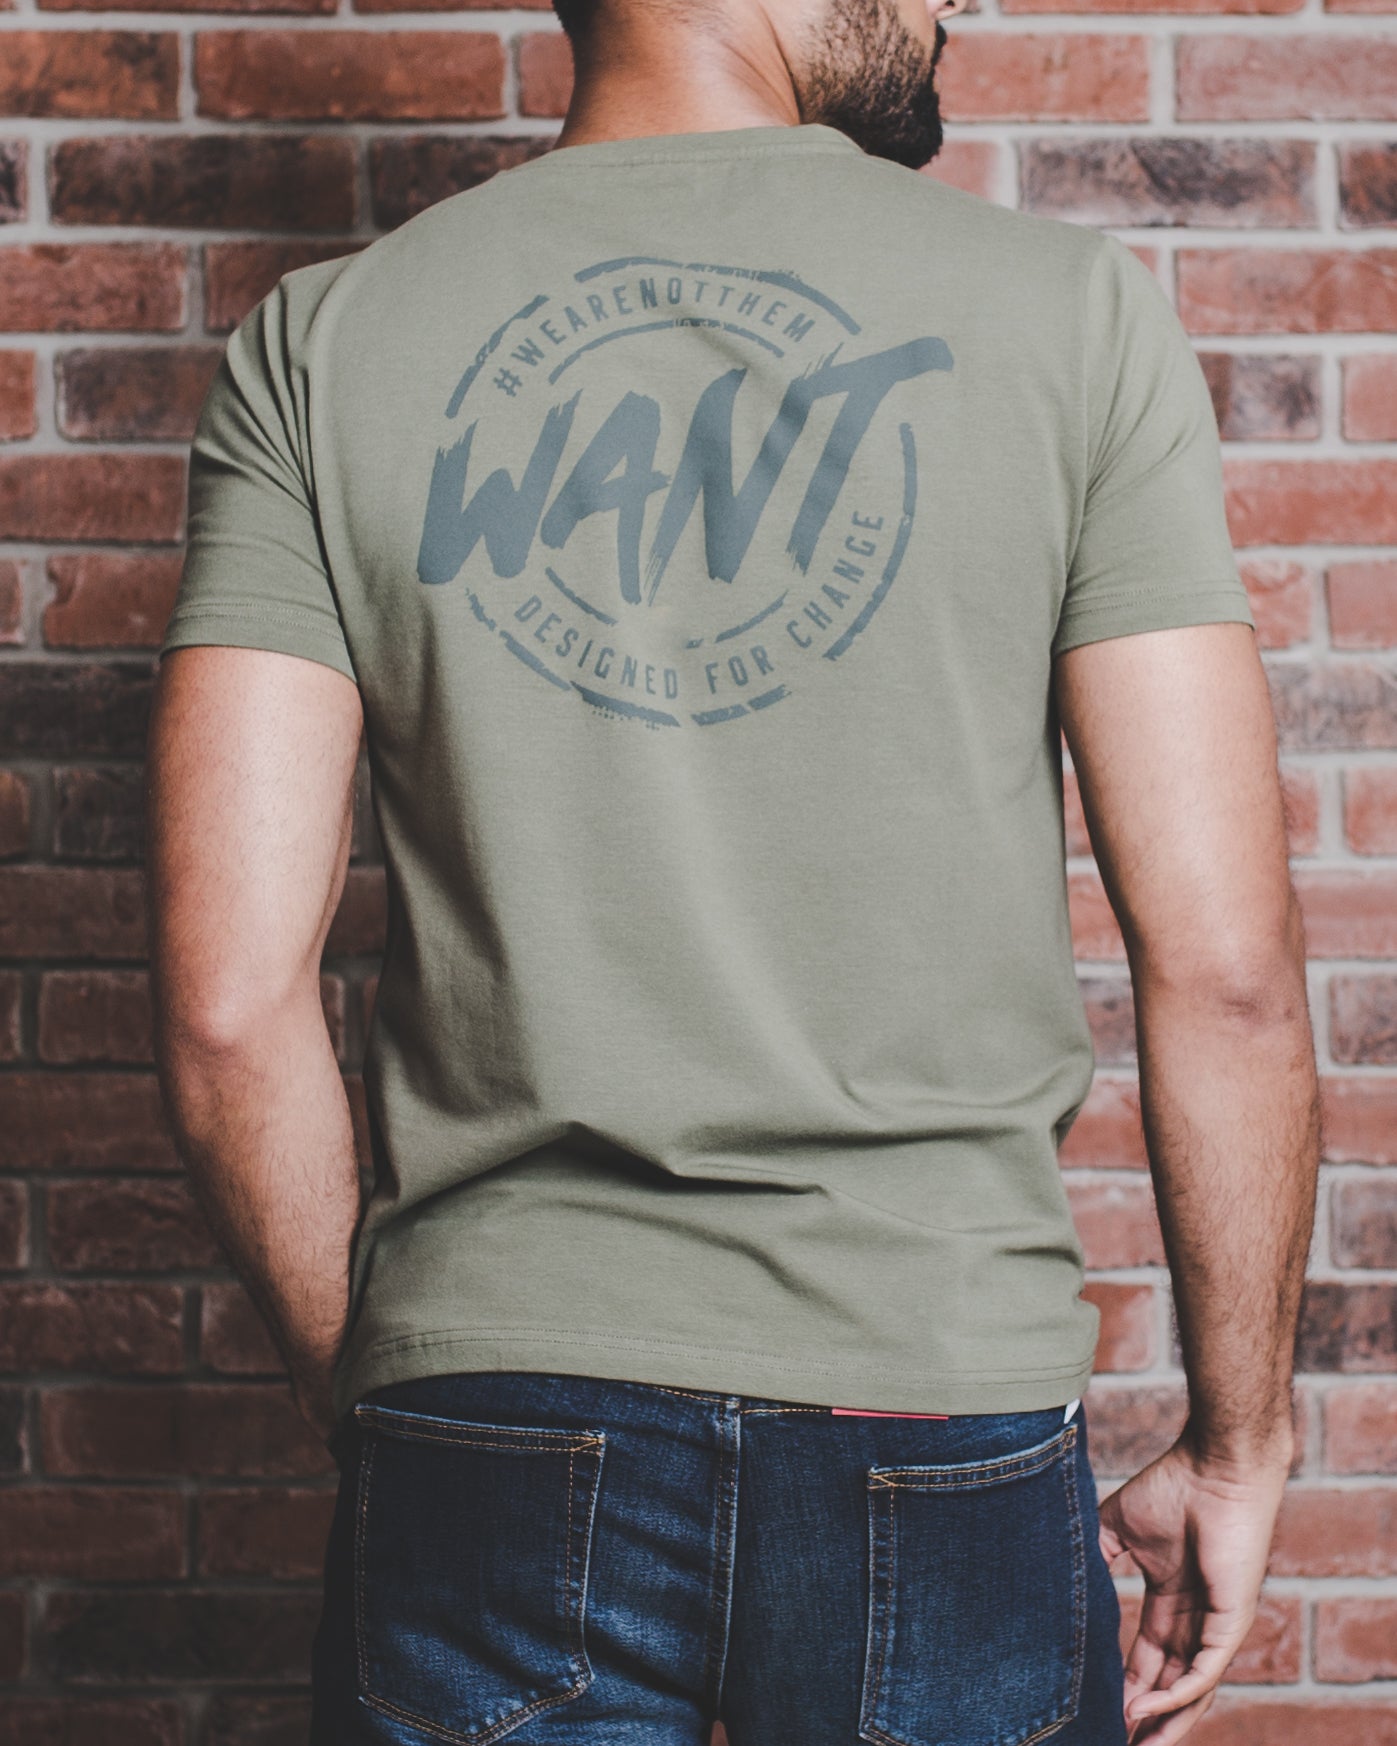 Designed For Change Organic WANT T-Shirt - Khaki